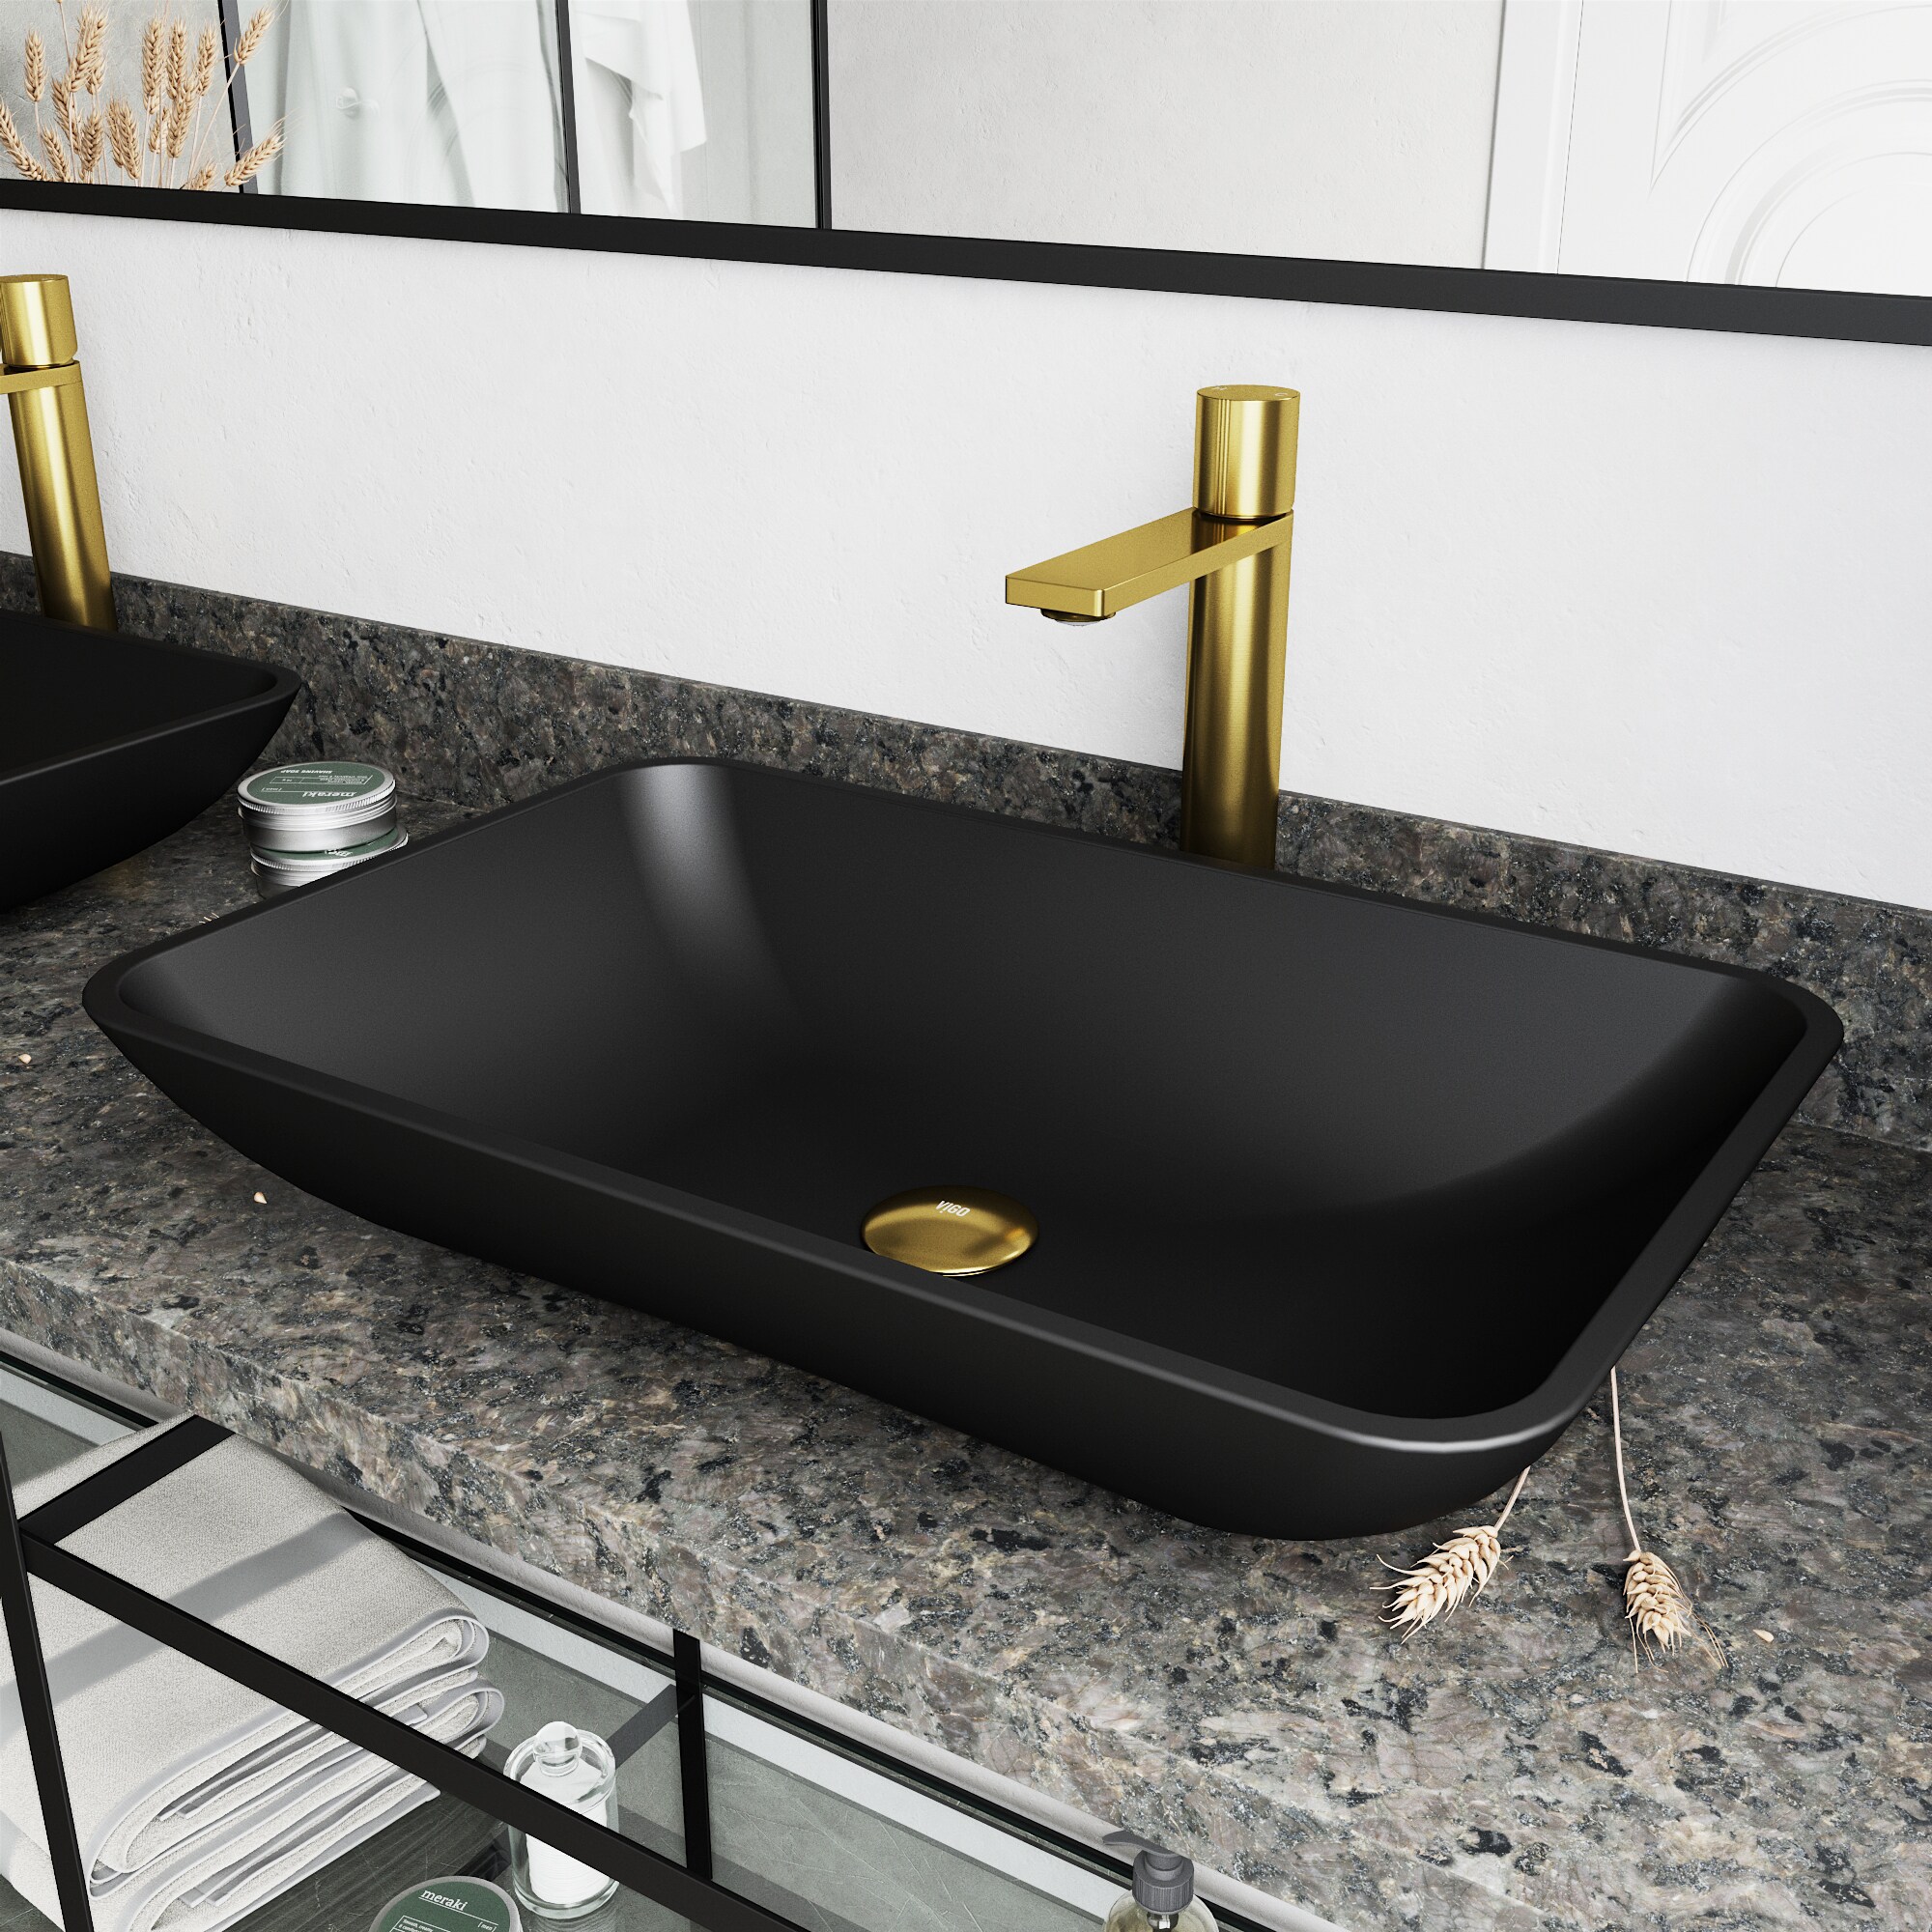 VIGO Gotham Matte Gold 1-handle Vessel WaterSense Low-arc Bathroom Sink Faucet